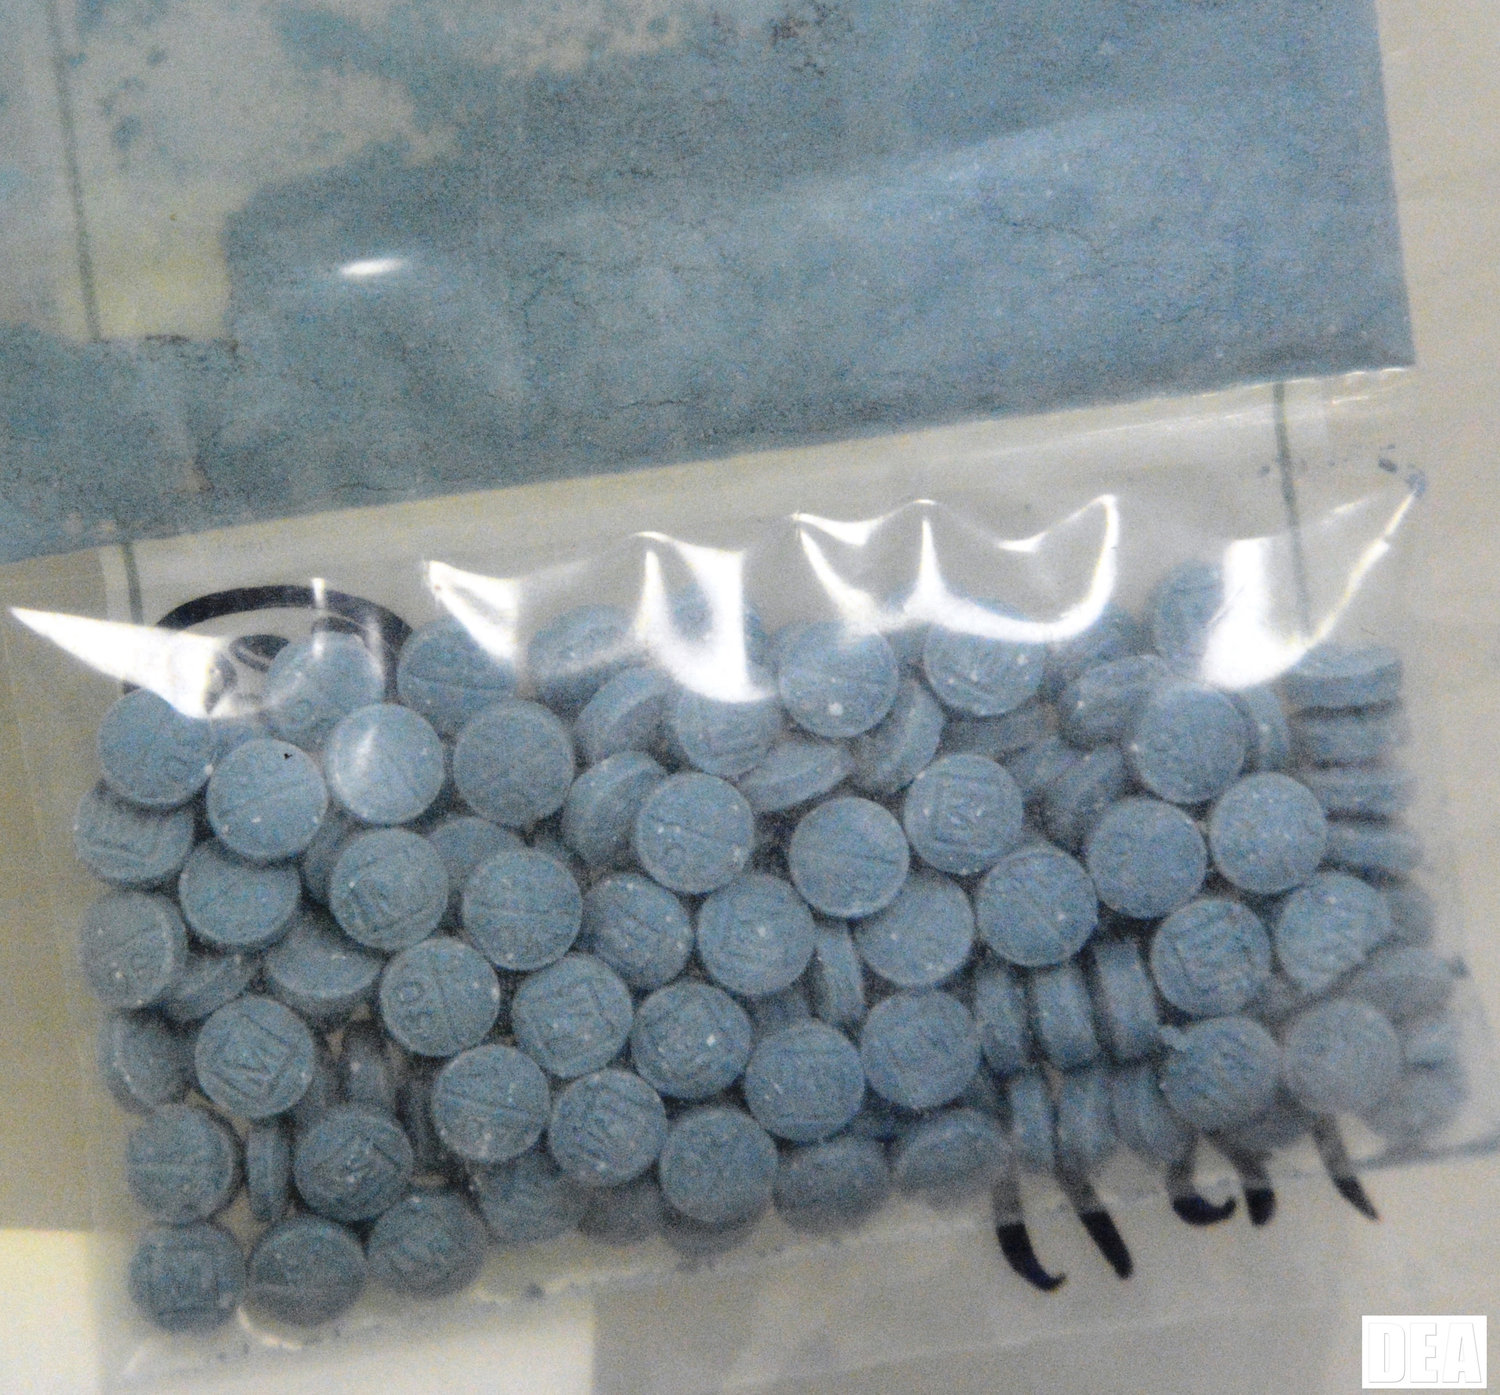 A bag of fentanyl pills, as seen on July 2, 2018. (U.S. Drug Enforcement Administration)